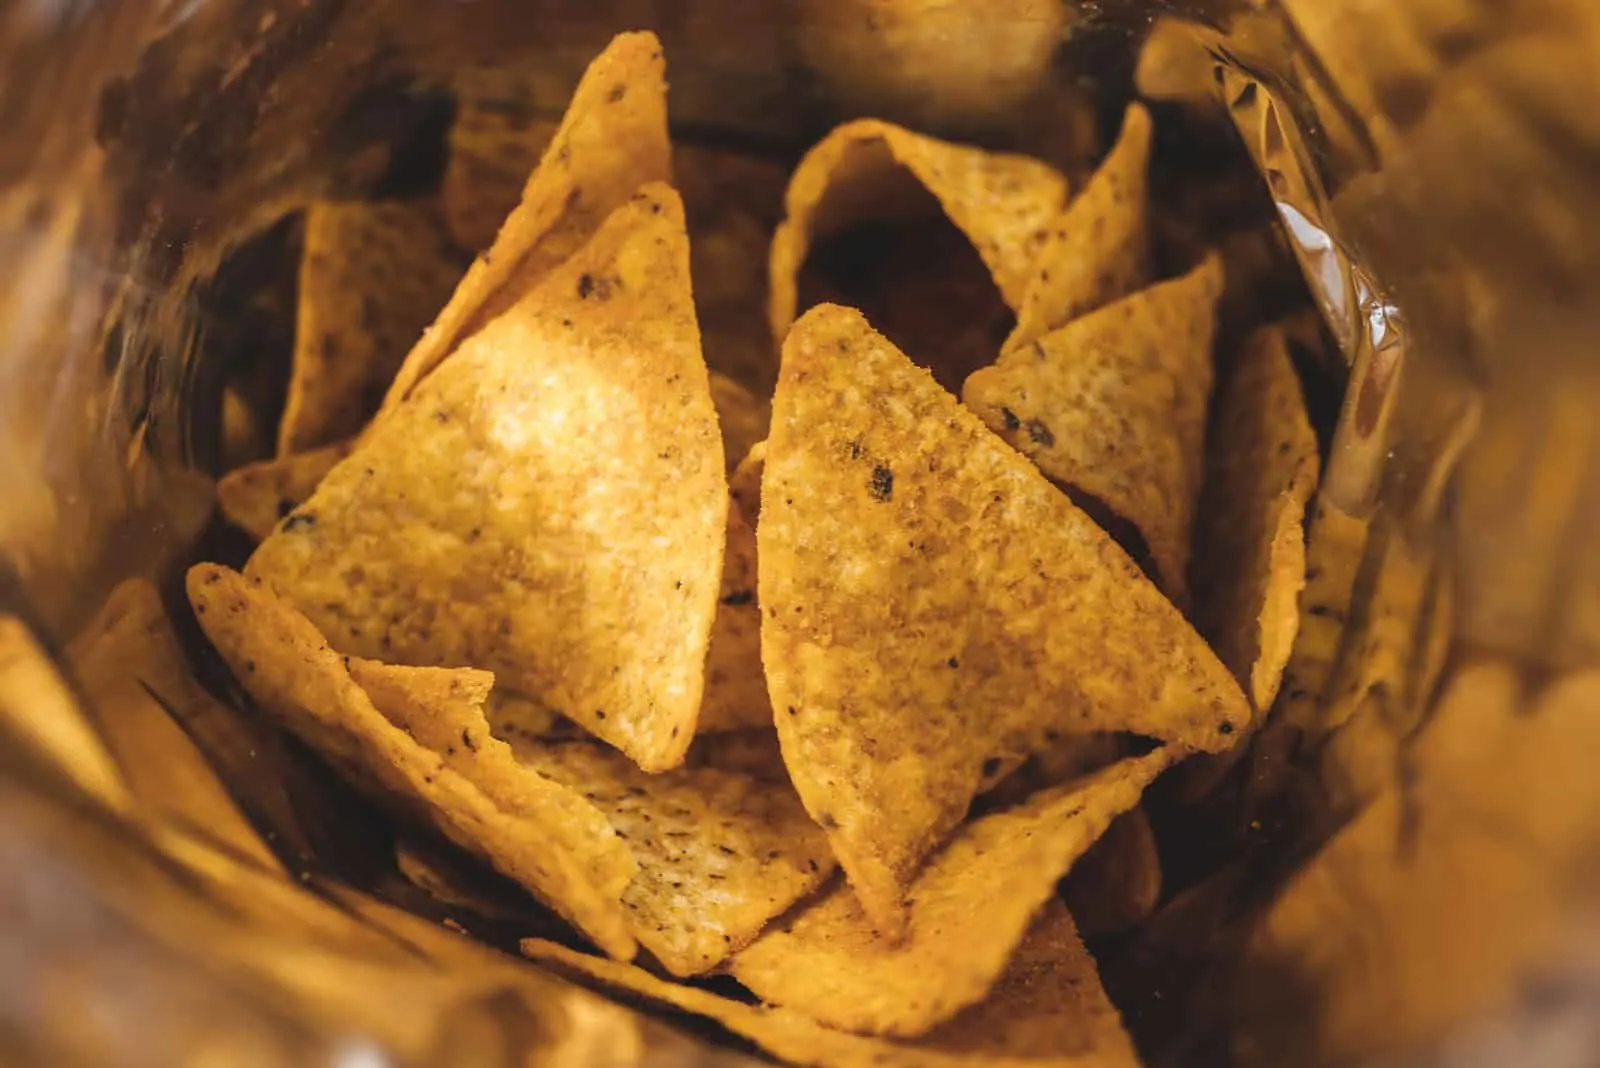 doritos chips in a bag